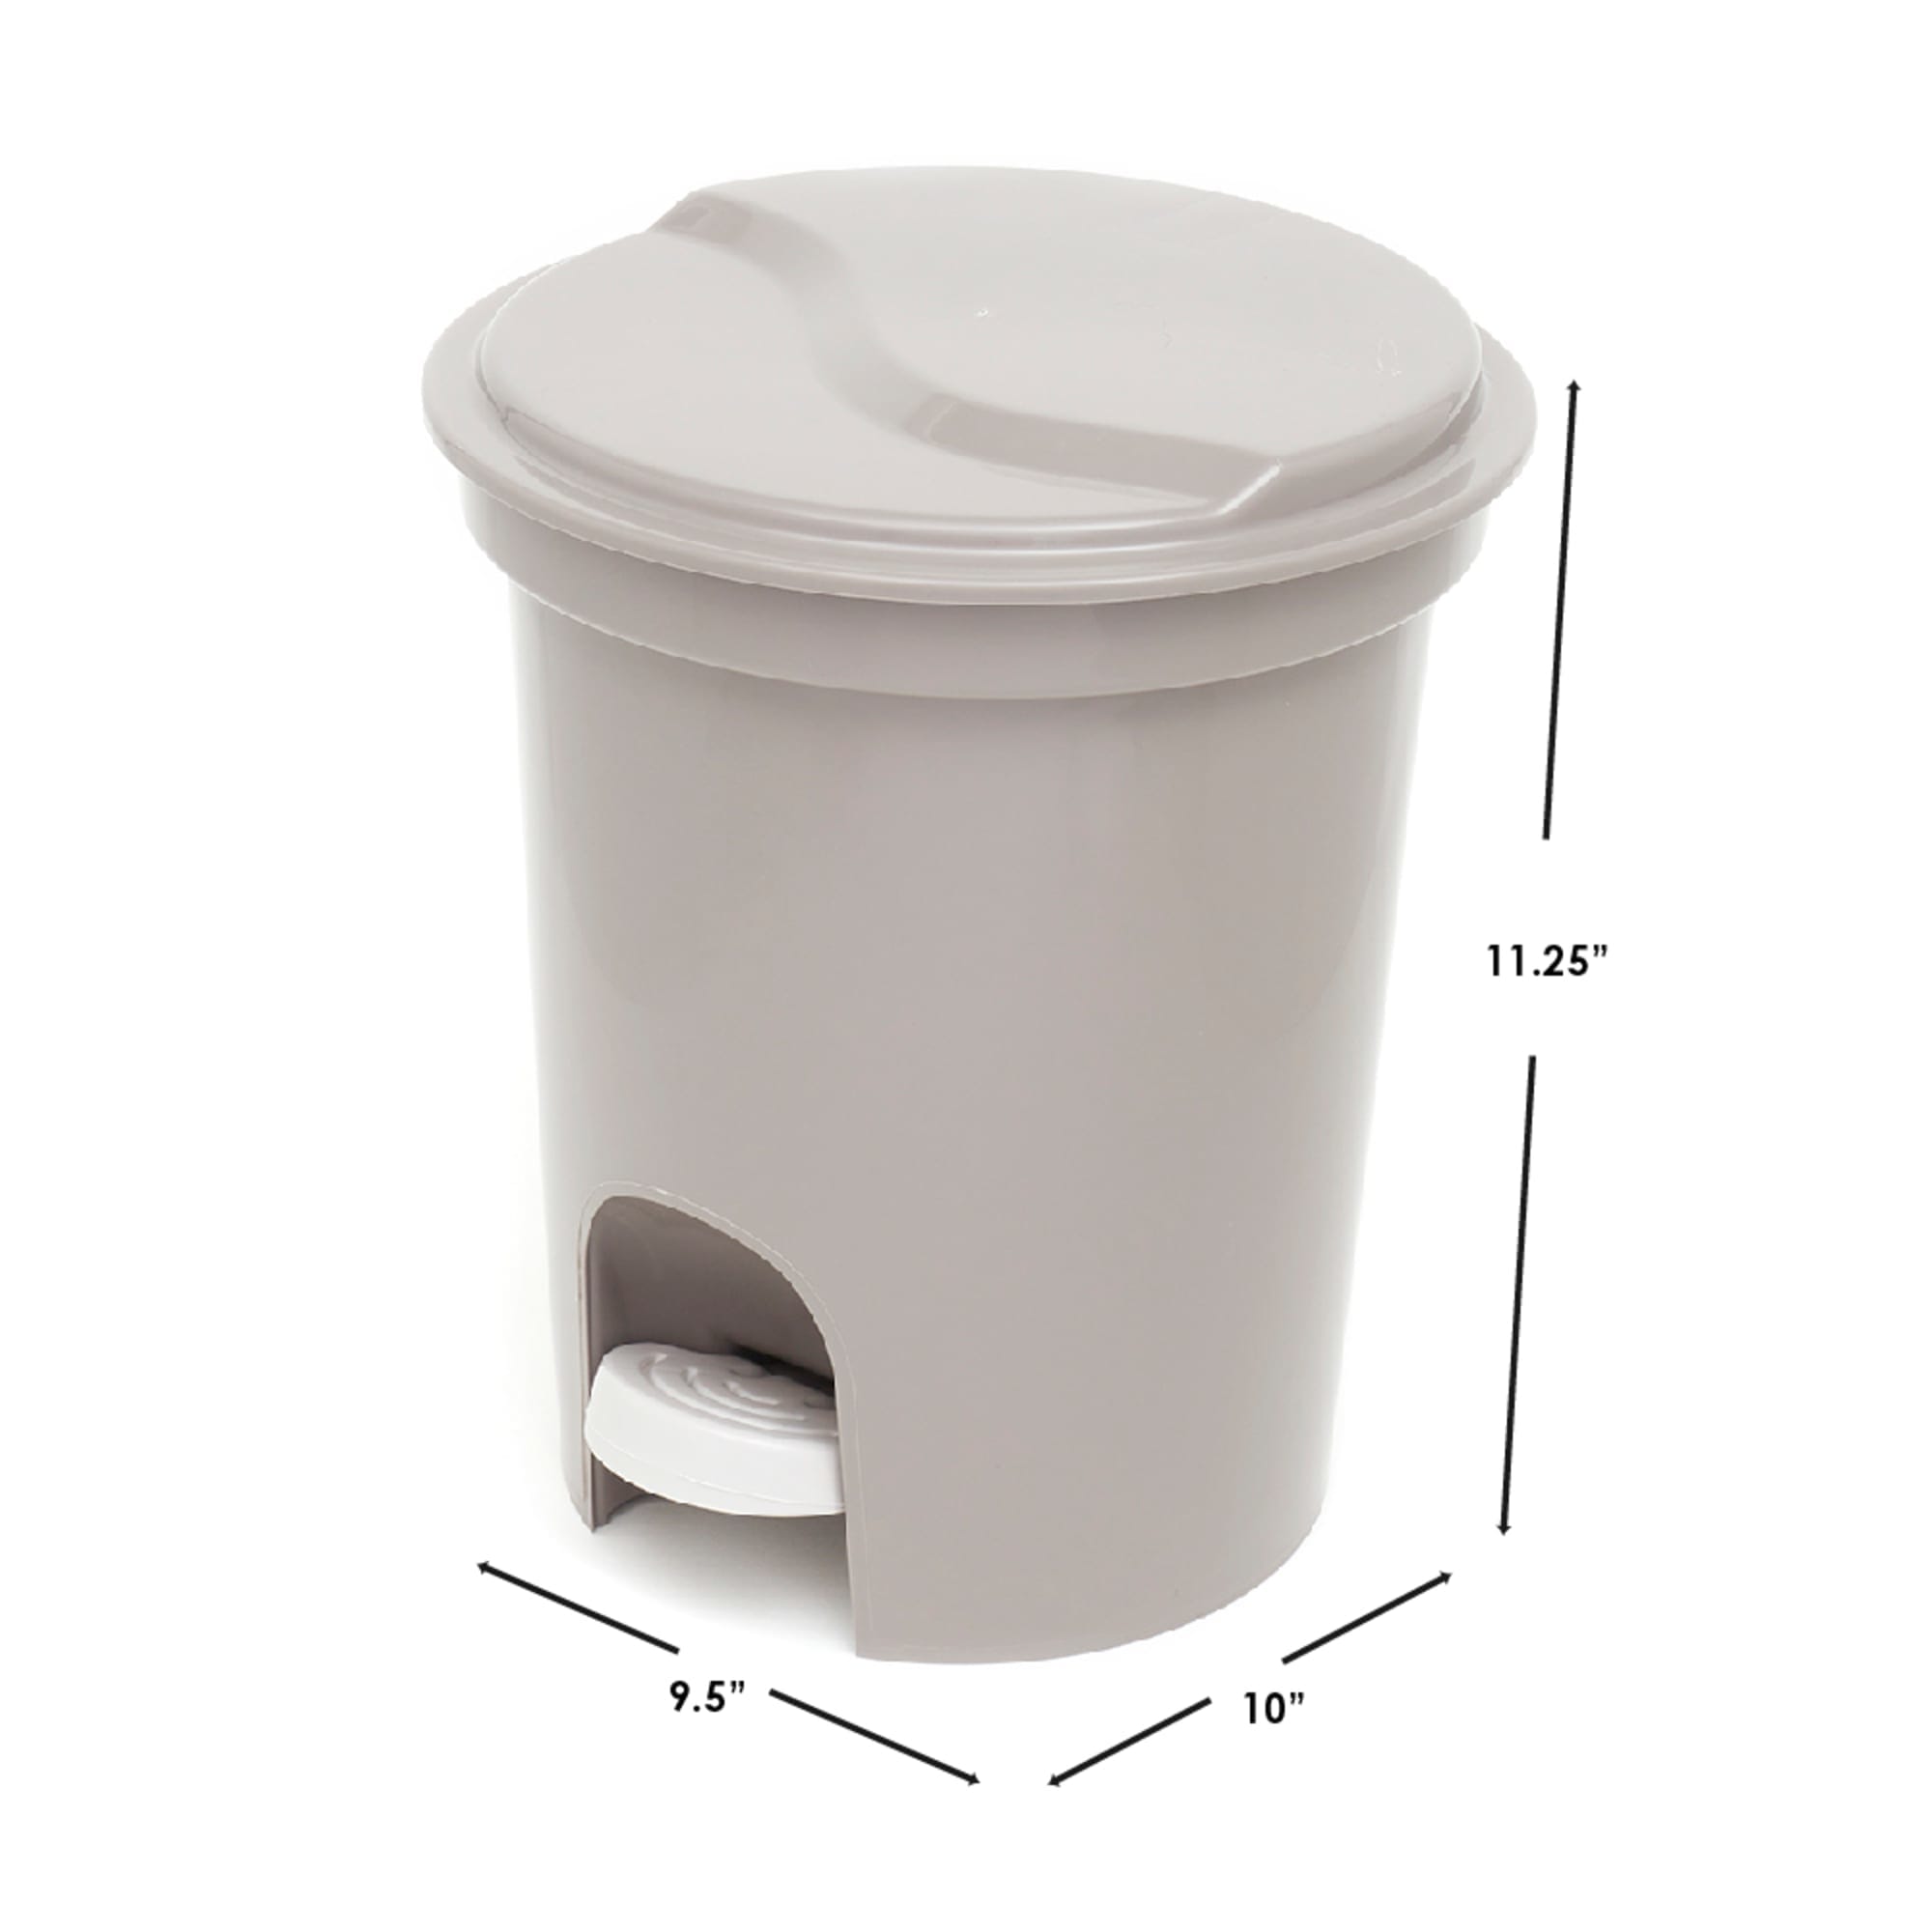 Home Basics 8 Liter Plastic Step on Waste Bin, Grey $6 EACH, CASE PACK OF 6